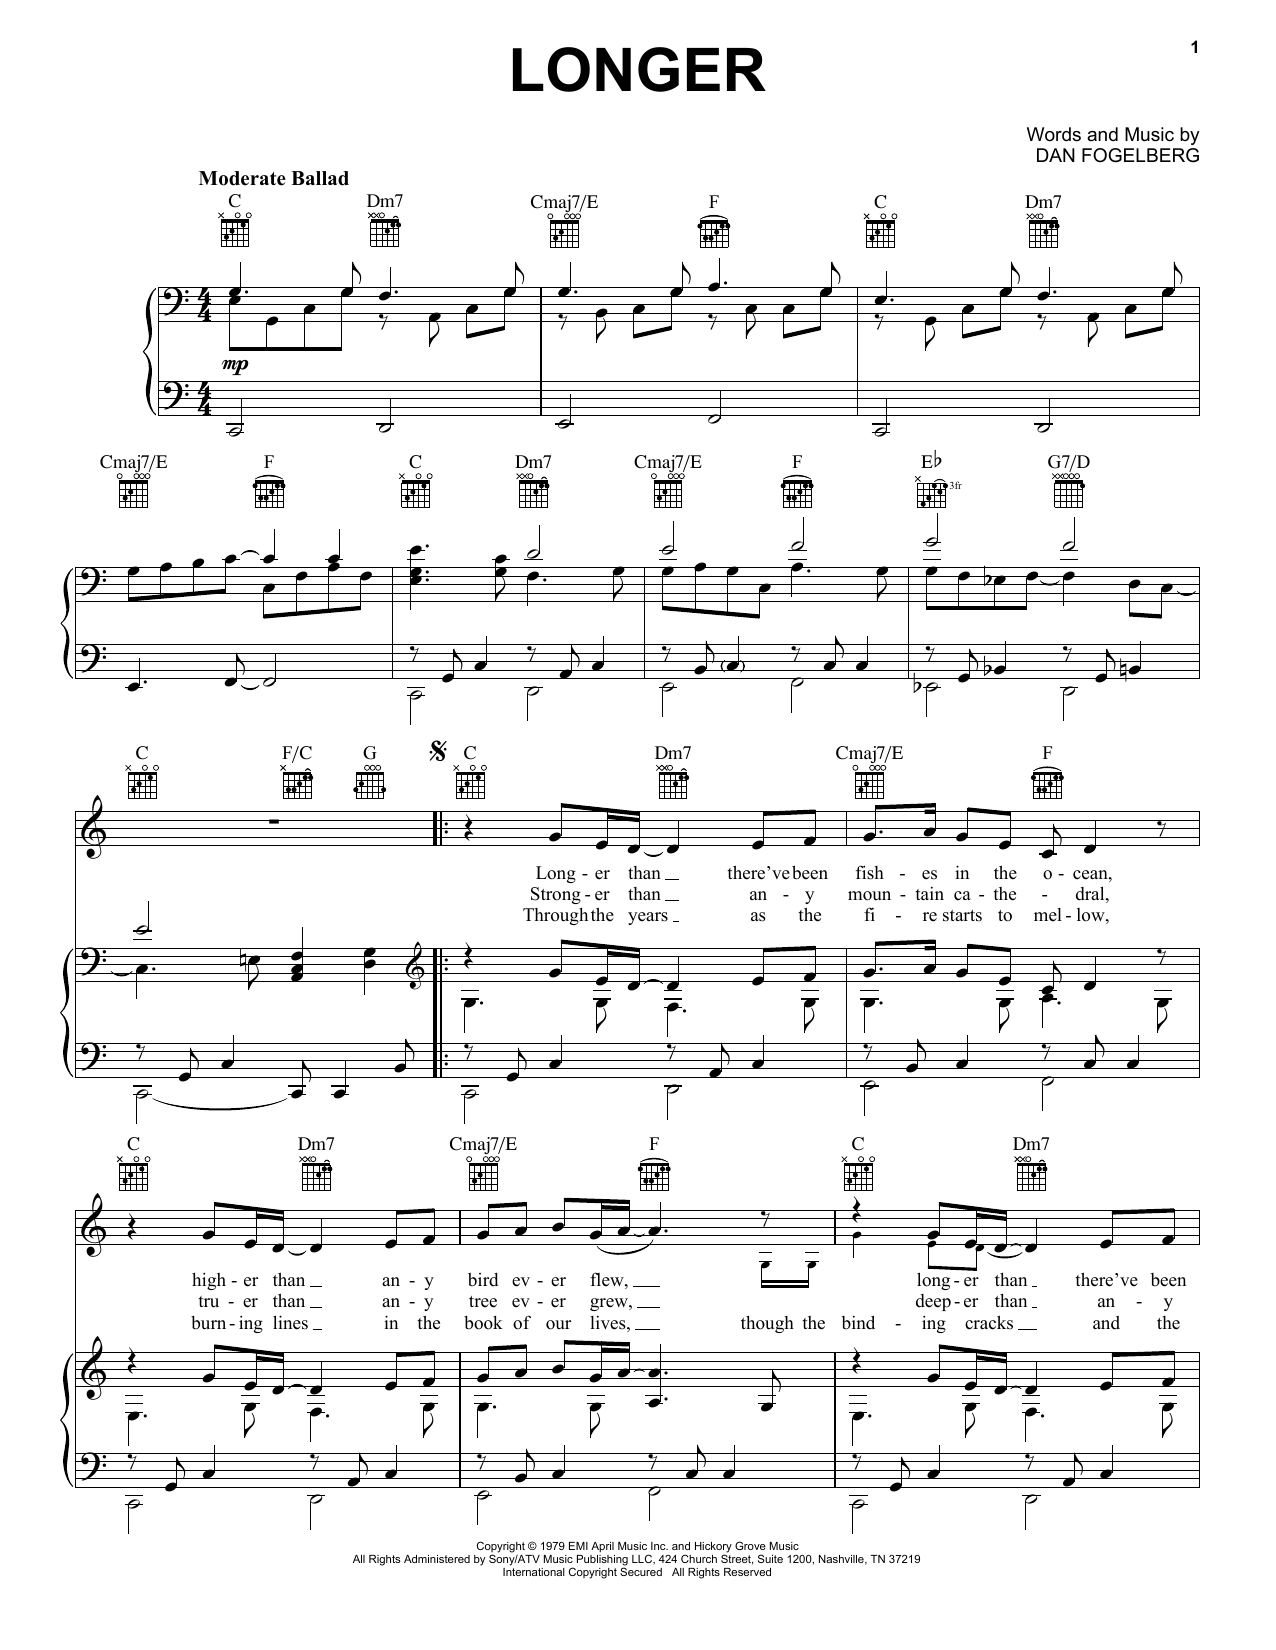 Dan Fogelberg Longer Sheet Music Notes & Chords for Ukulele with strumming patterns - Download or Print PDF